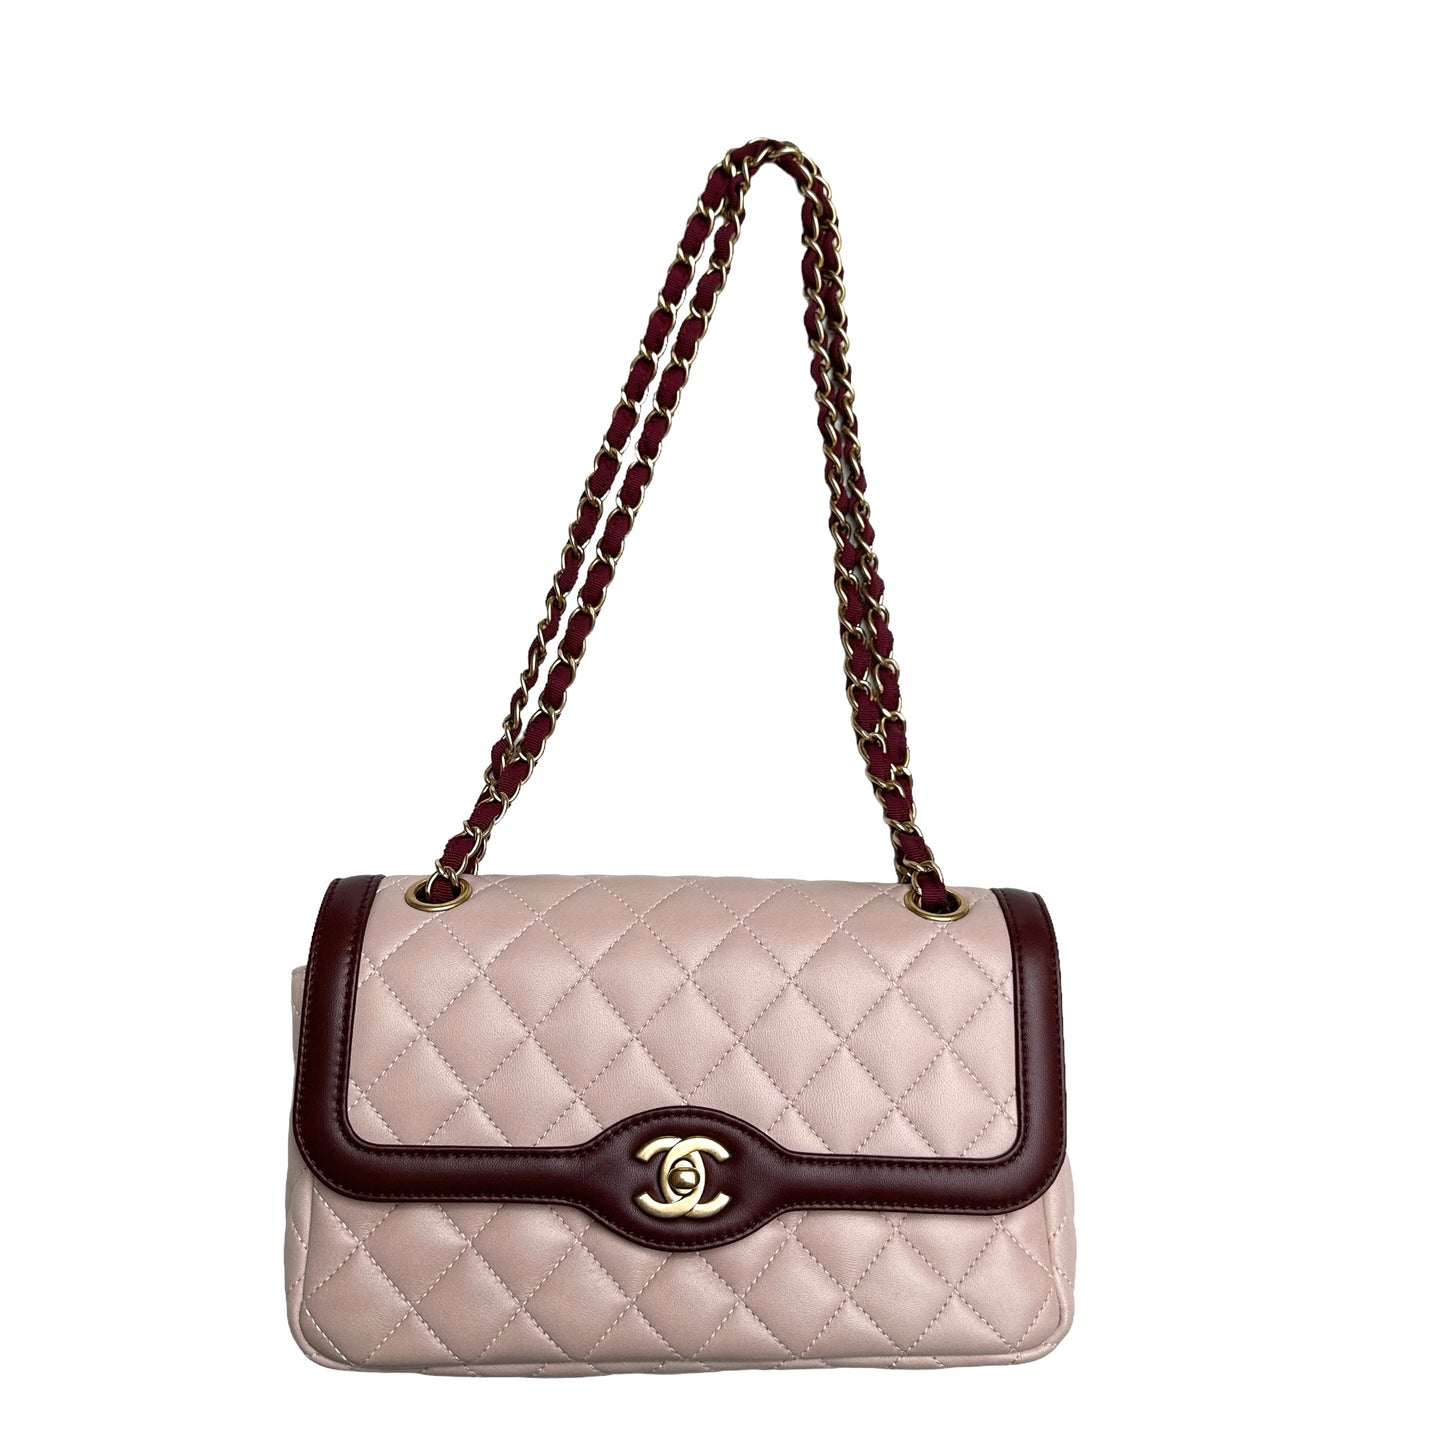 Pink and Burgundy Mademoiselle Flap Bag